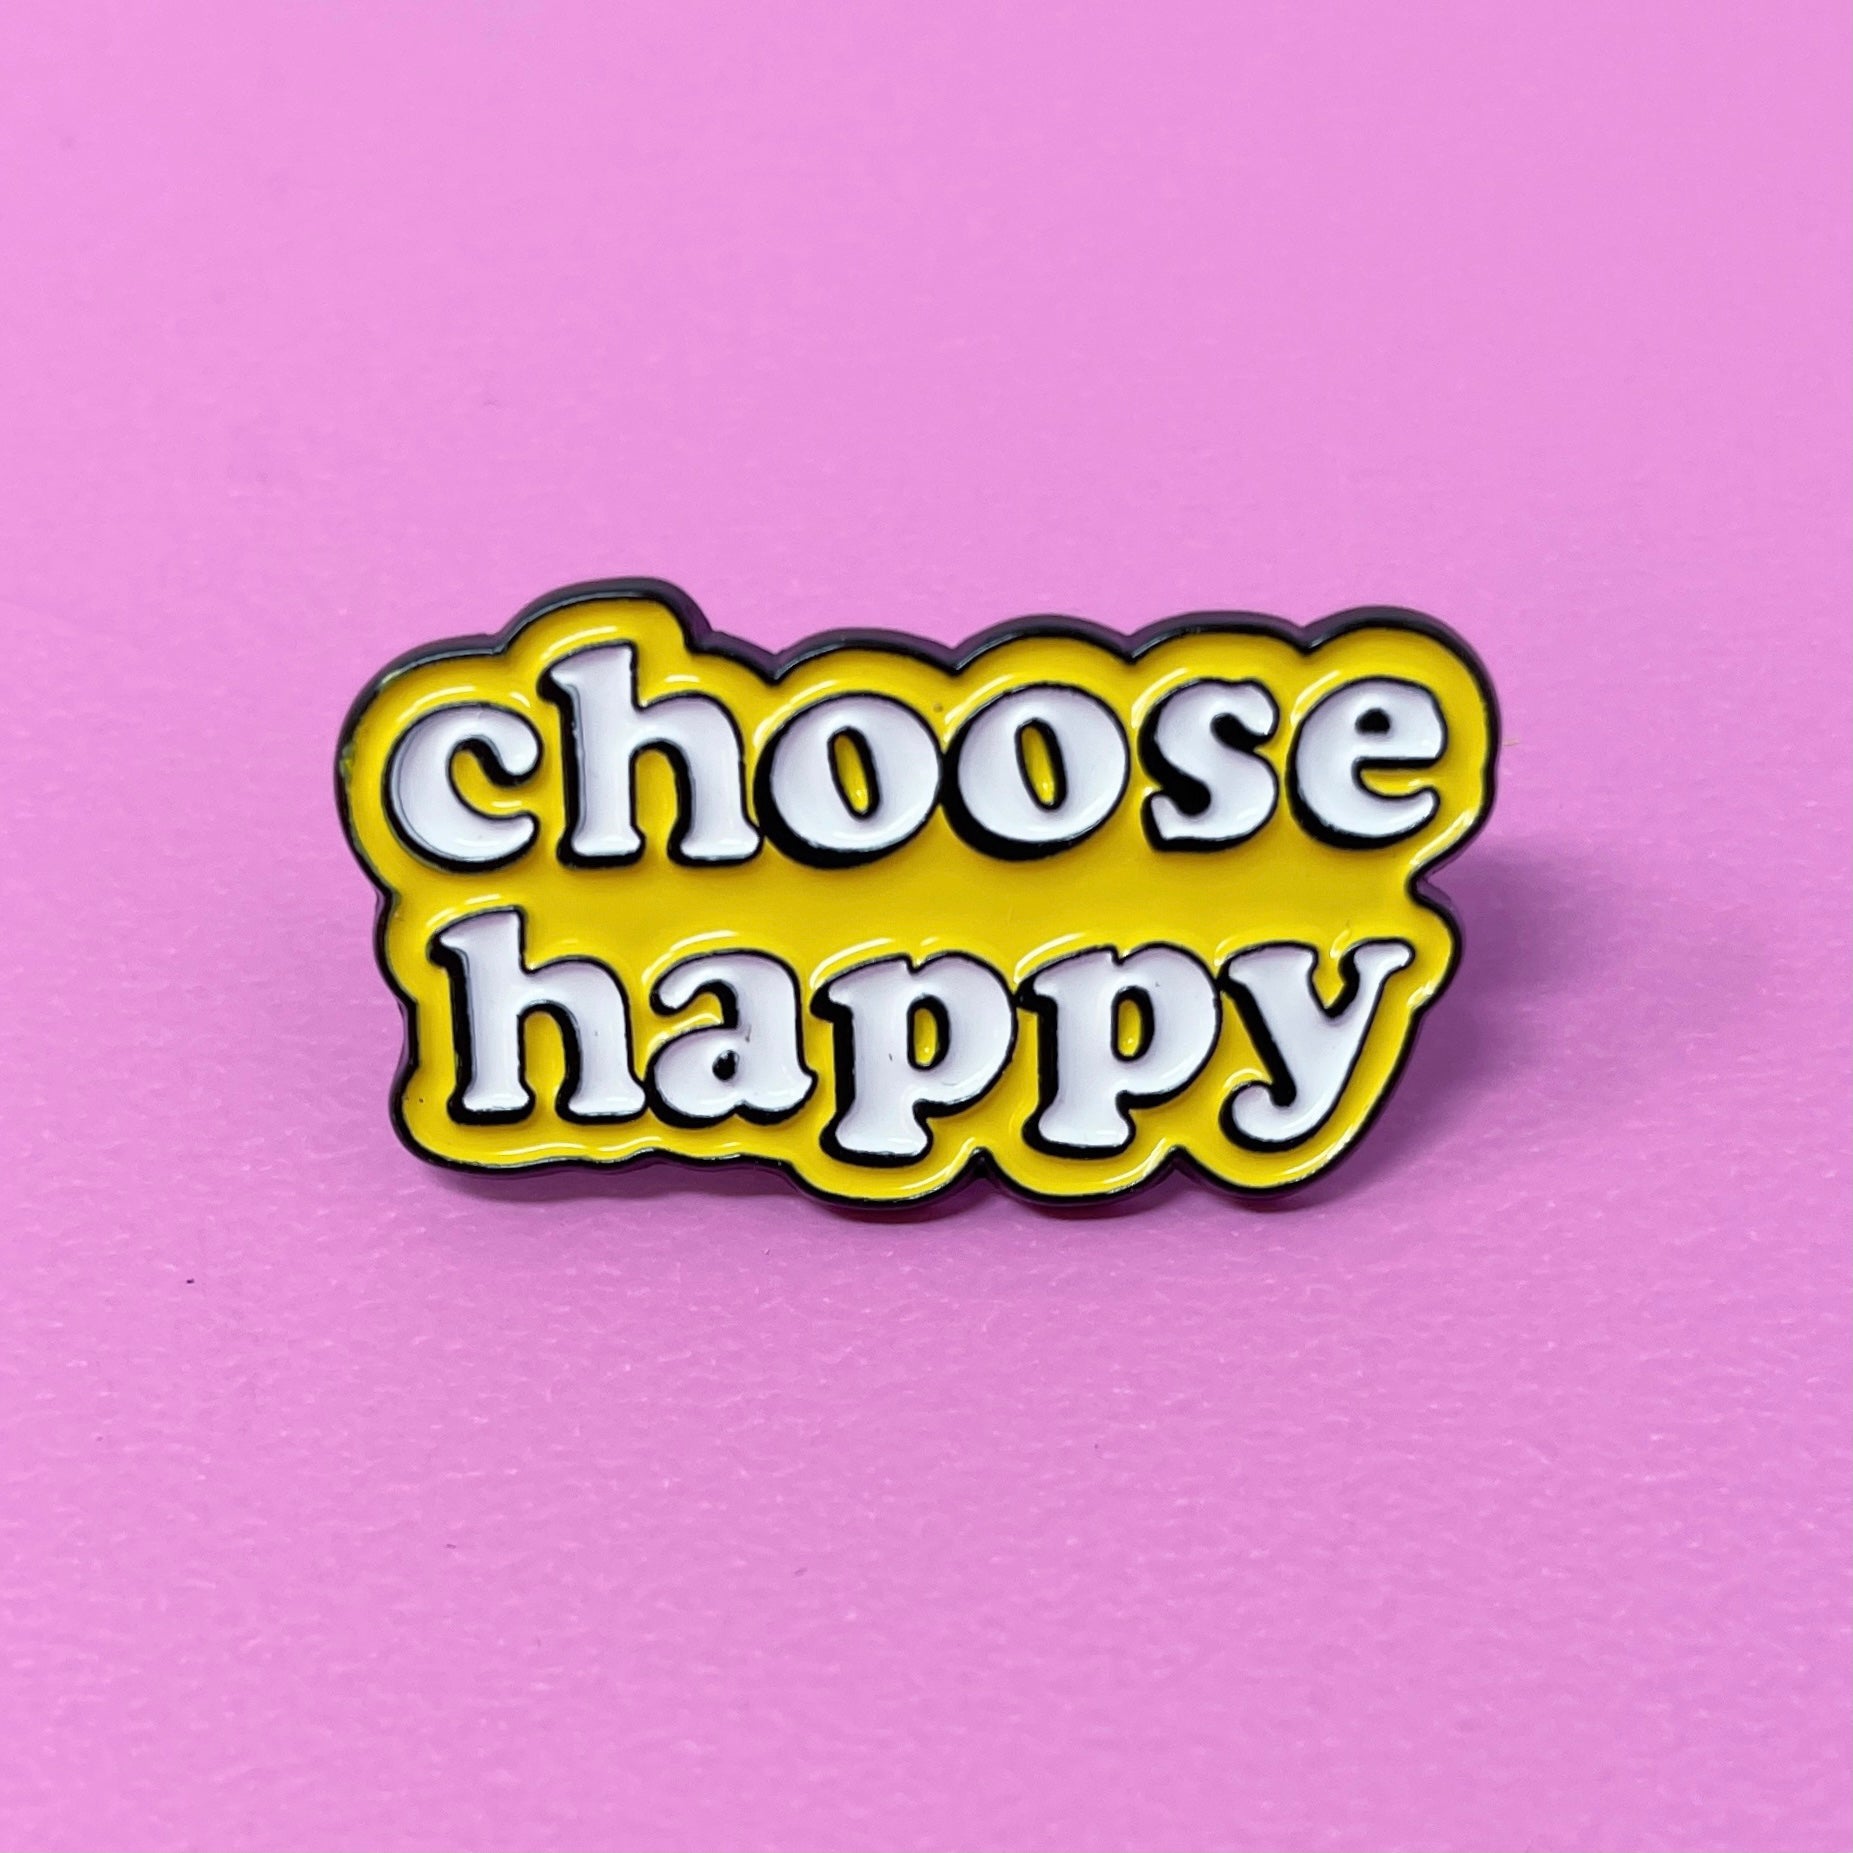 CHOOSE HAPPY PIN